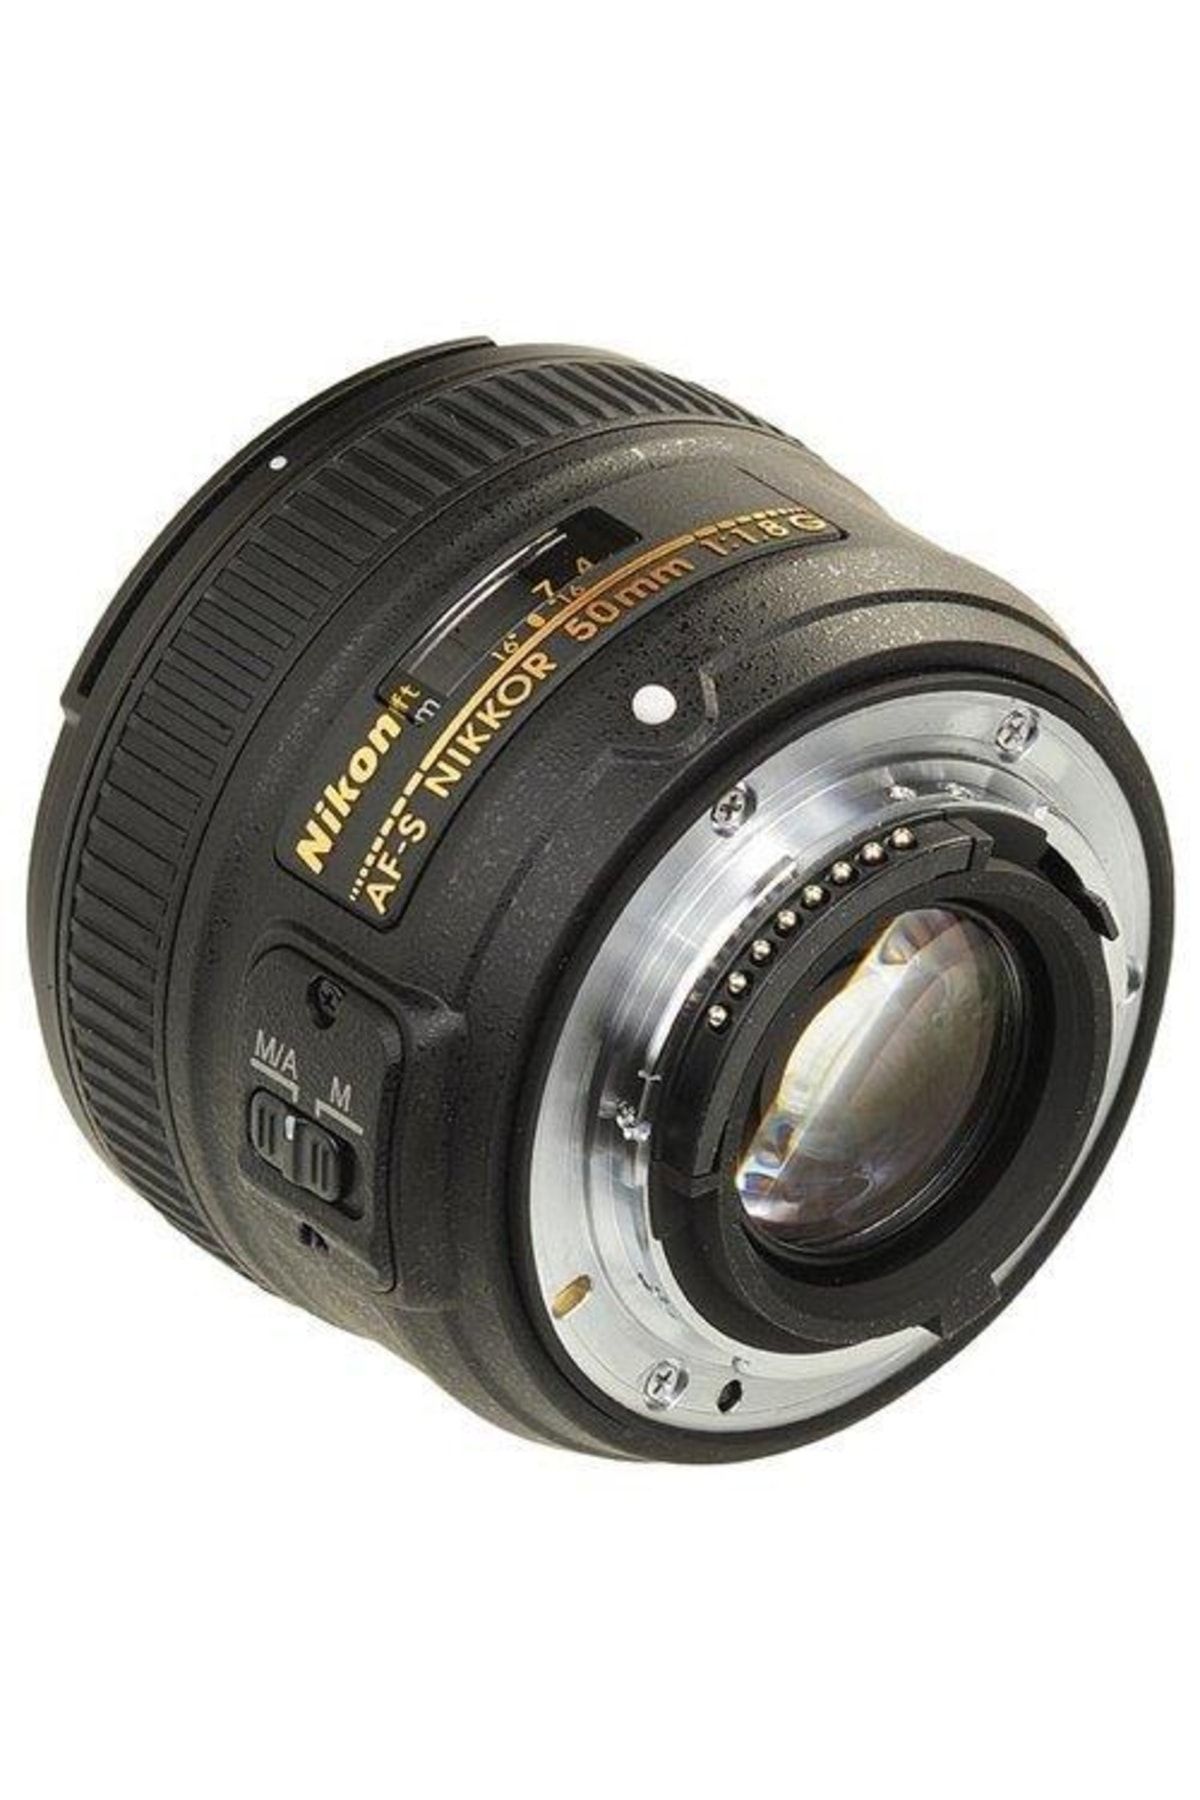 Купить объективы nikon f. Nikkor 50mm f1.8g af-s. Nikon 50mm f/1.8g af-s. Nikon 50mm f/1.8g af-s Nikkor. Объектив Nikon 50mm f/1.8g.